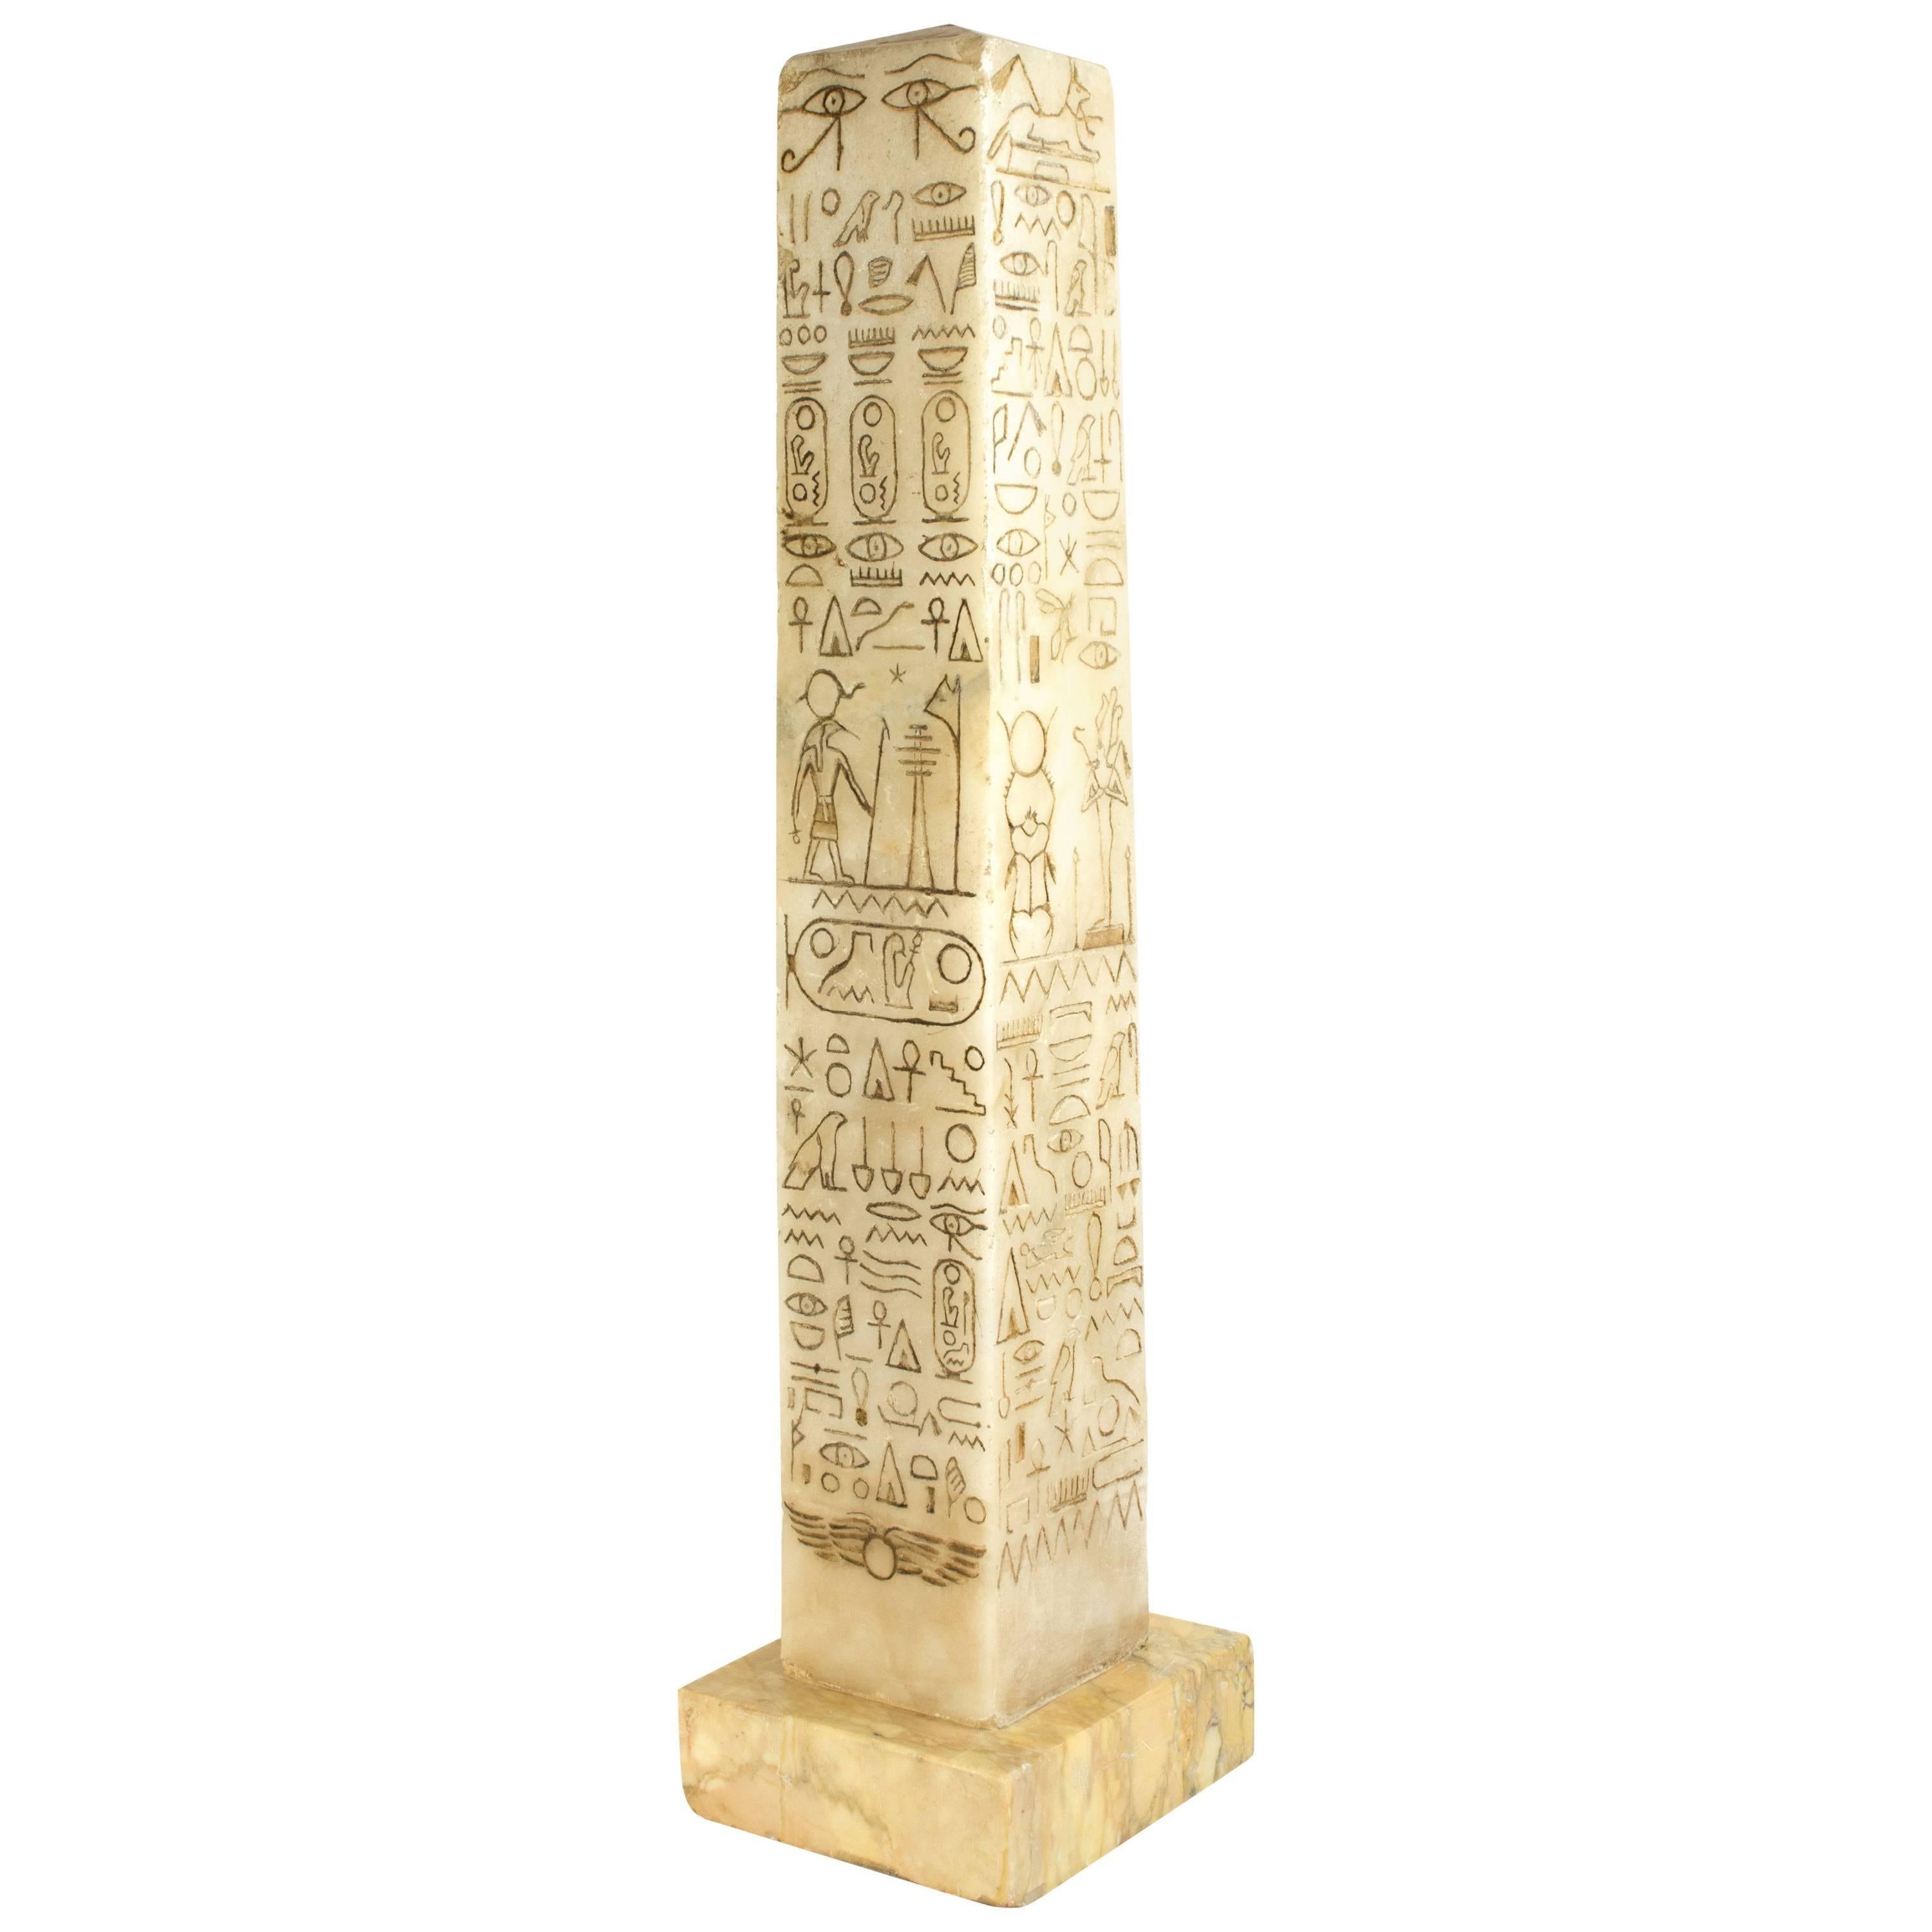 Striking and Unusual Large Alabaster Obelisk, 19th Century